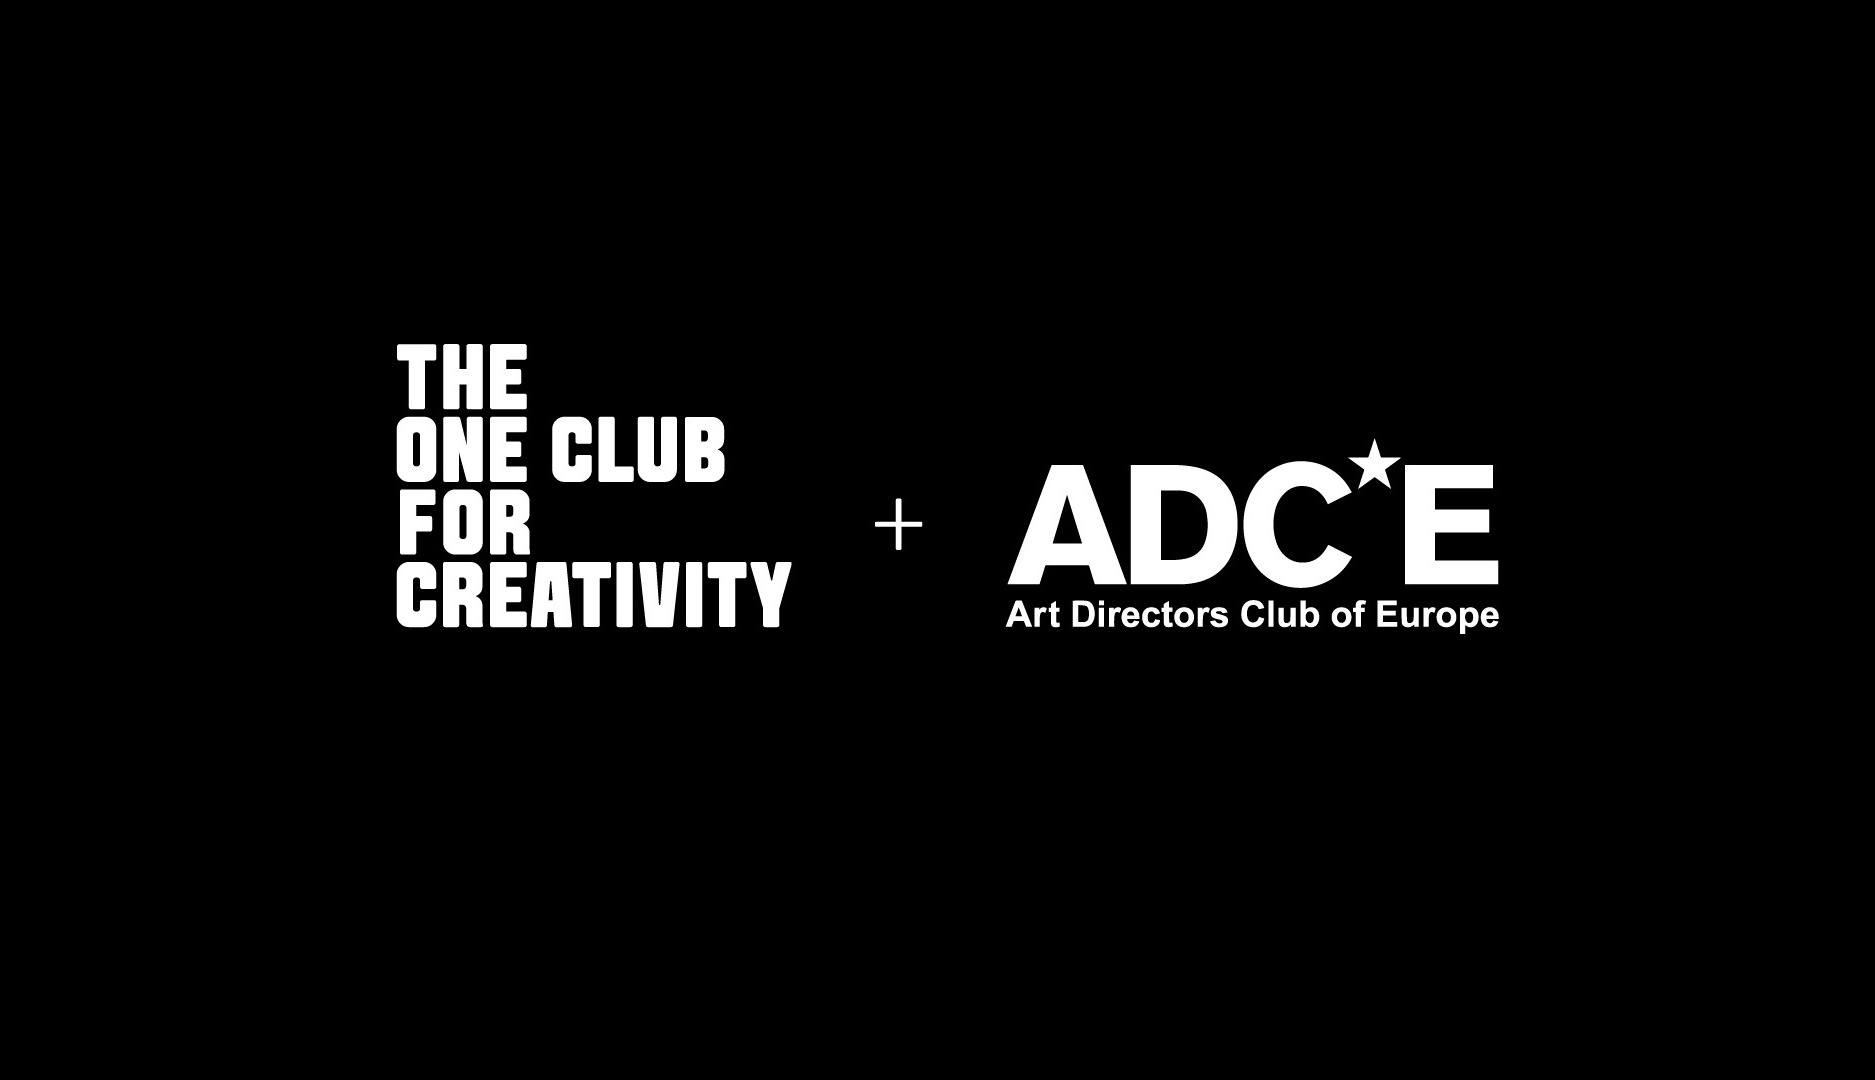 El Art Directors Club of Europe se fusiona con The One Club for Creativity